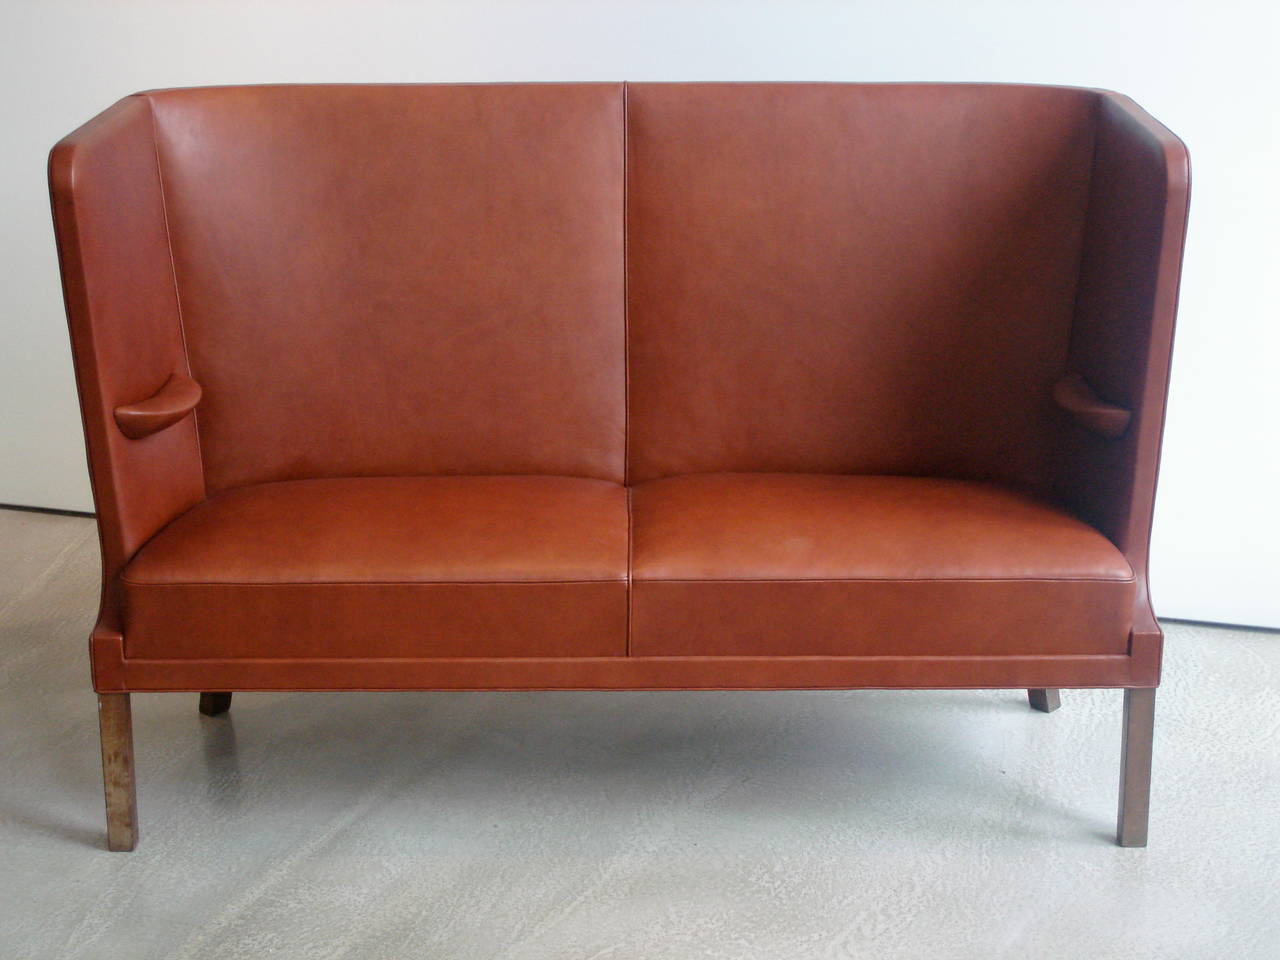 1930s sofa